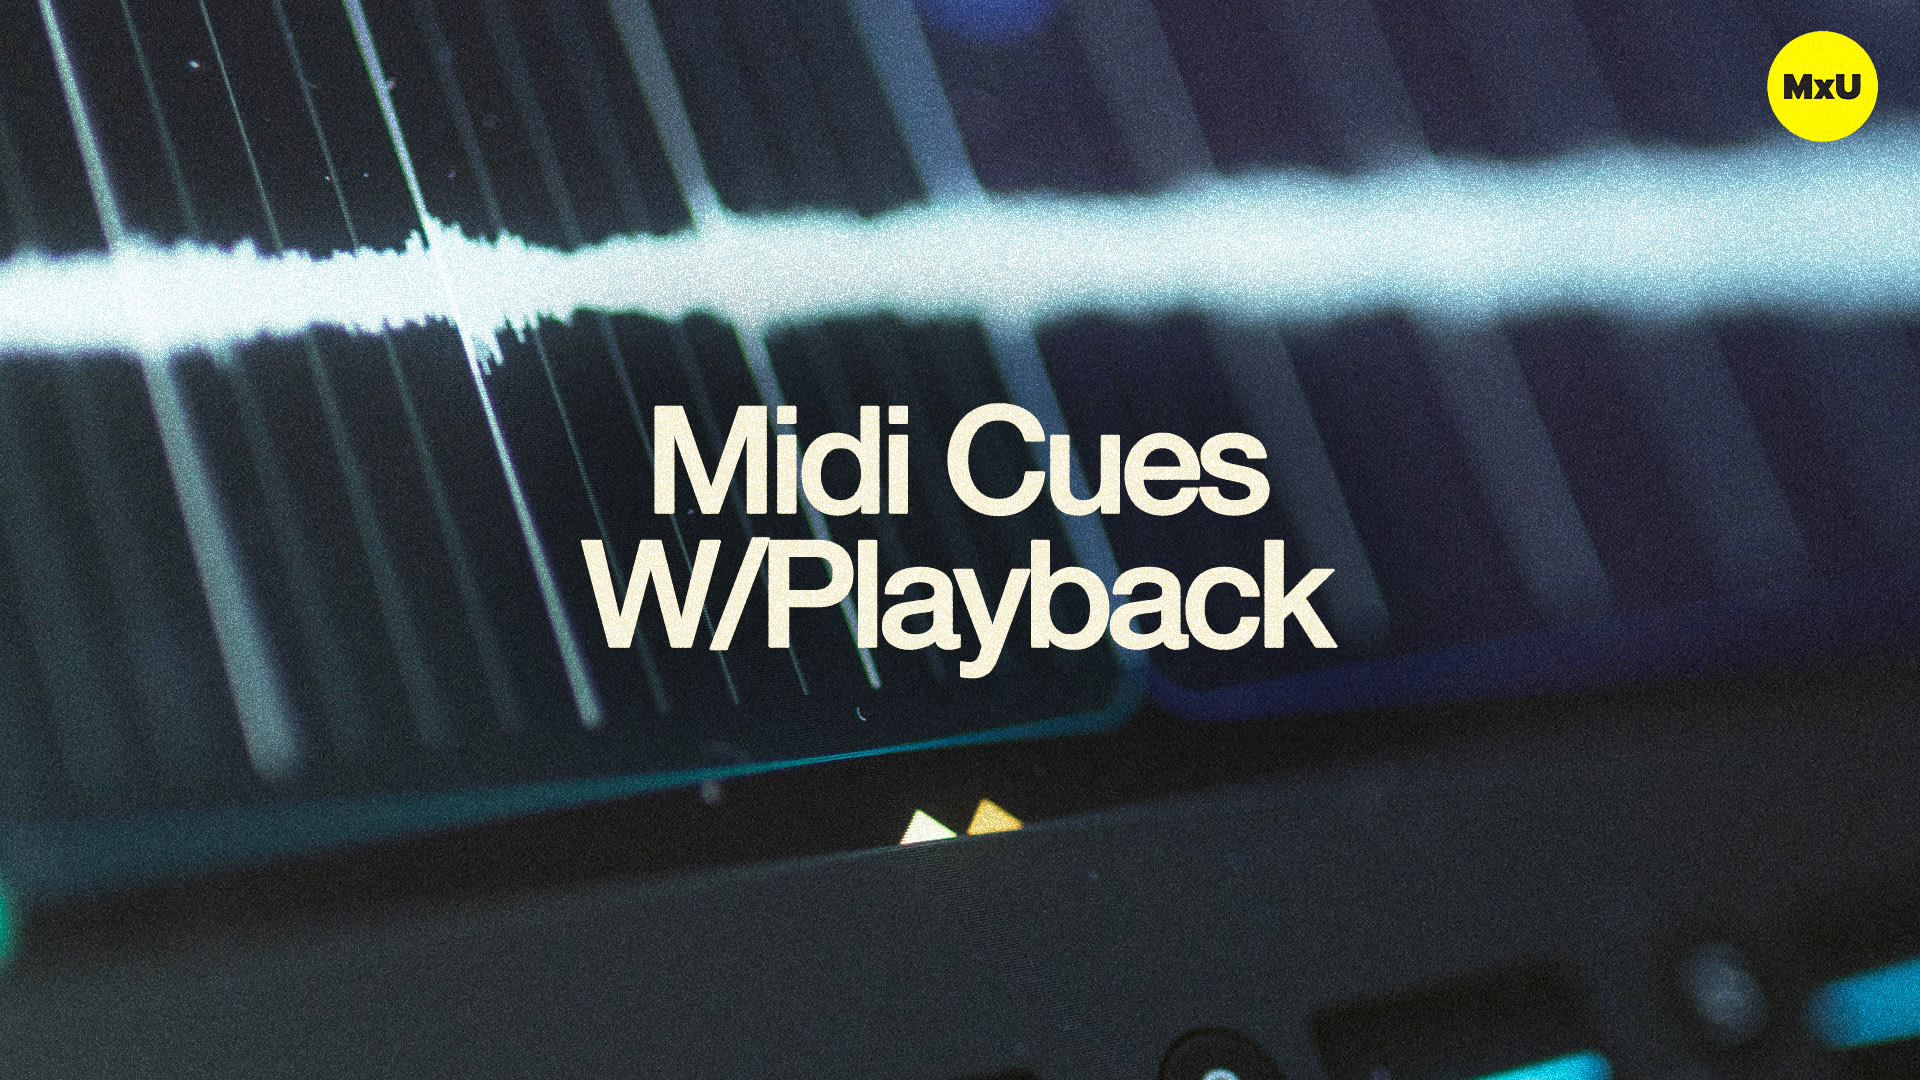 Midi Cues W/Playback